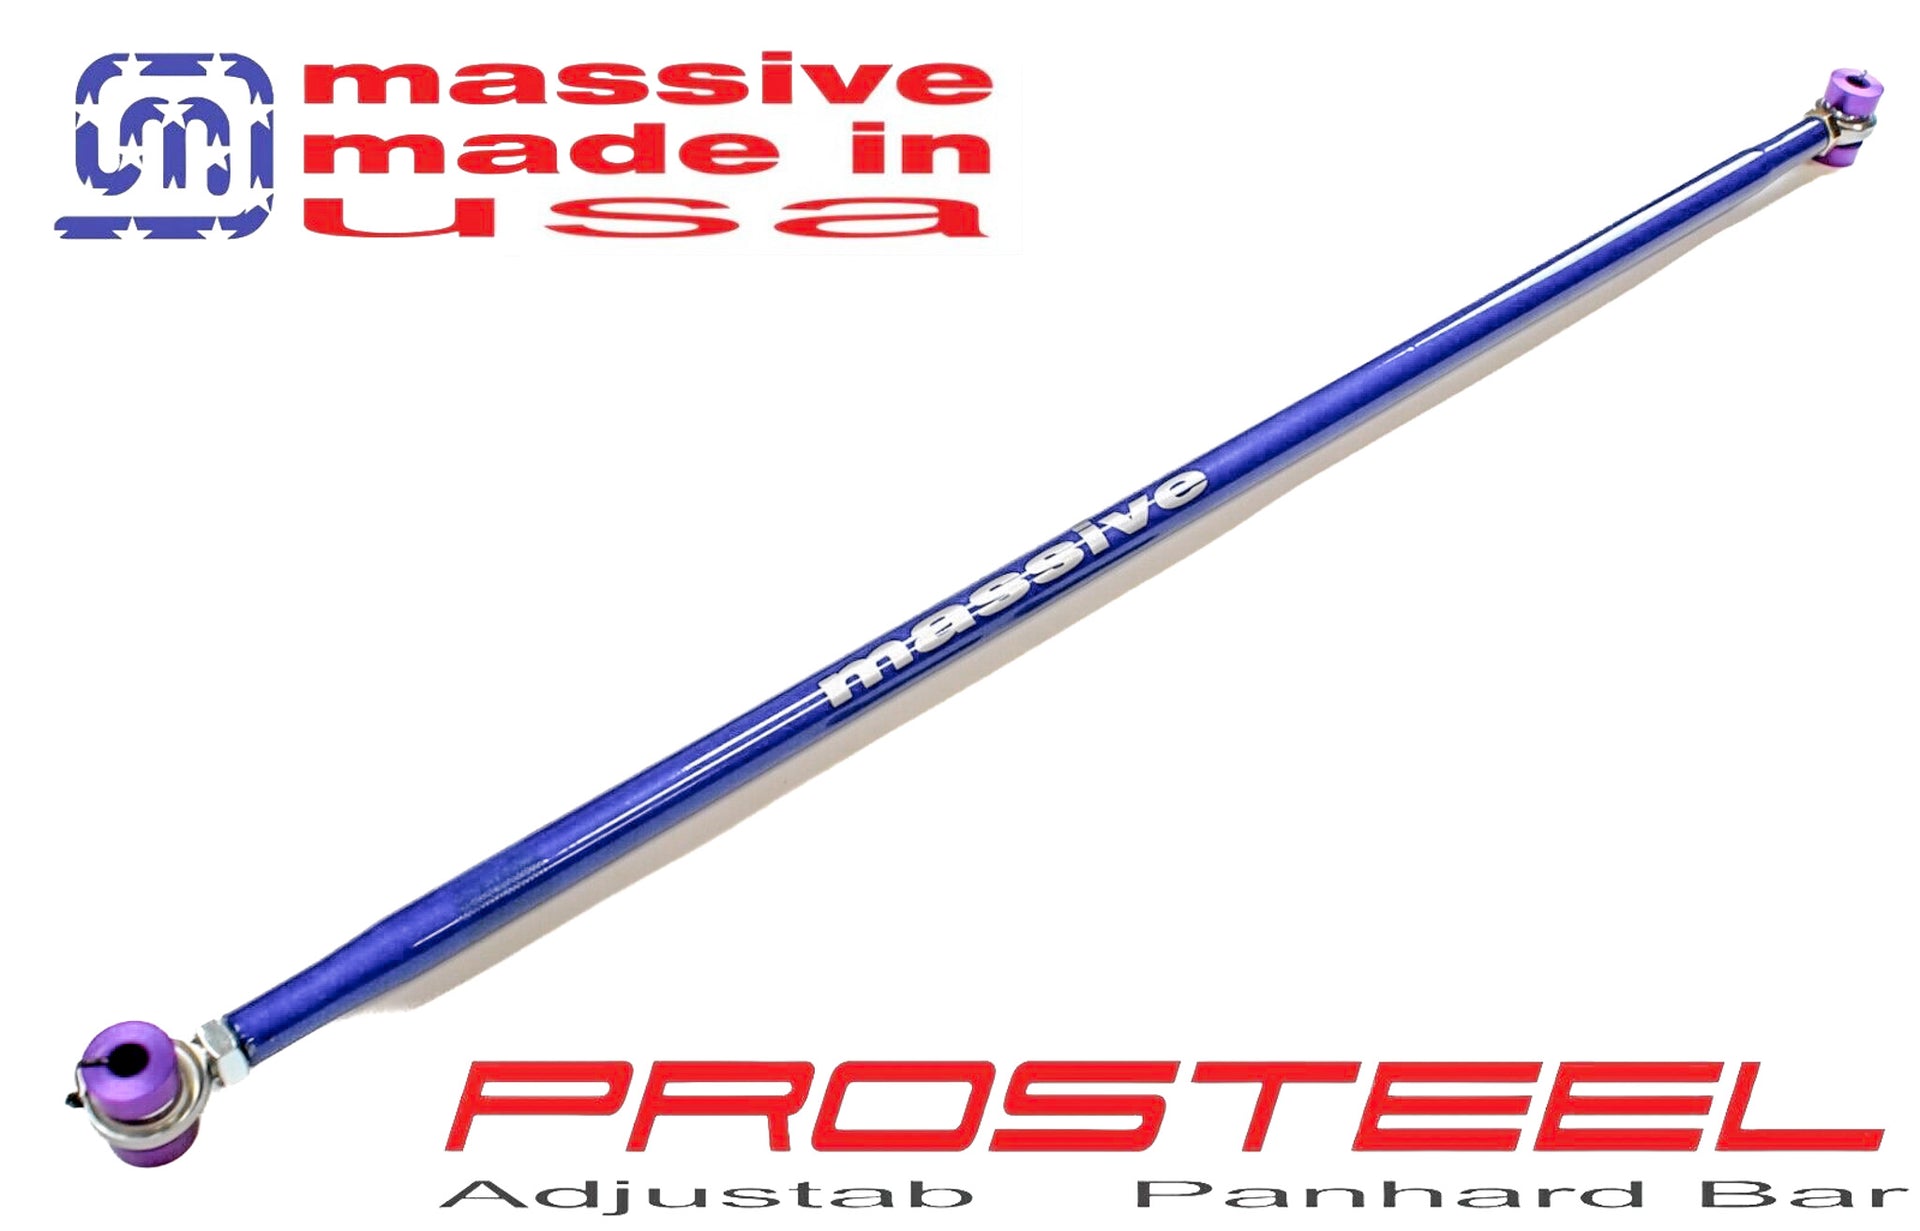 Massive Panhard PROSTEEL Rod 05-14Mustang GT 500 S197 3.7 4.0 4.6 5.0 5.4 - Massive Speed System